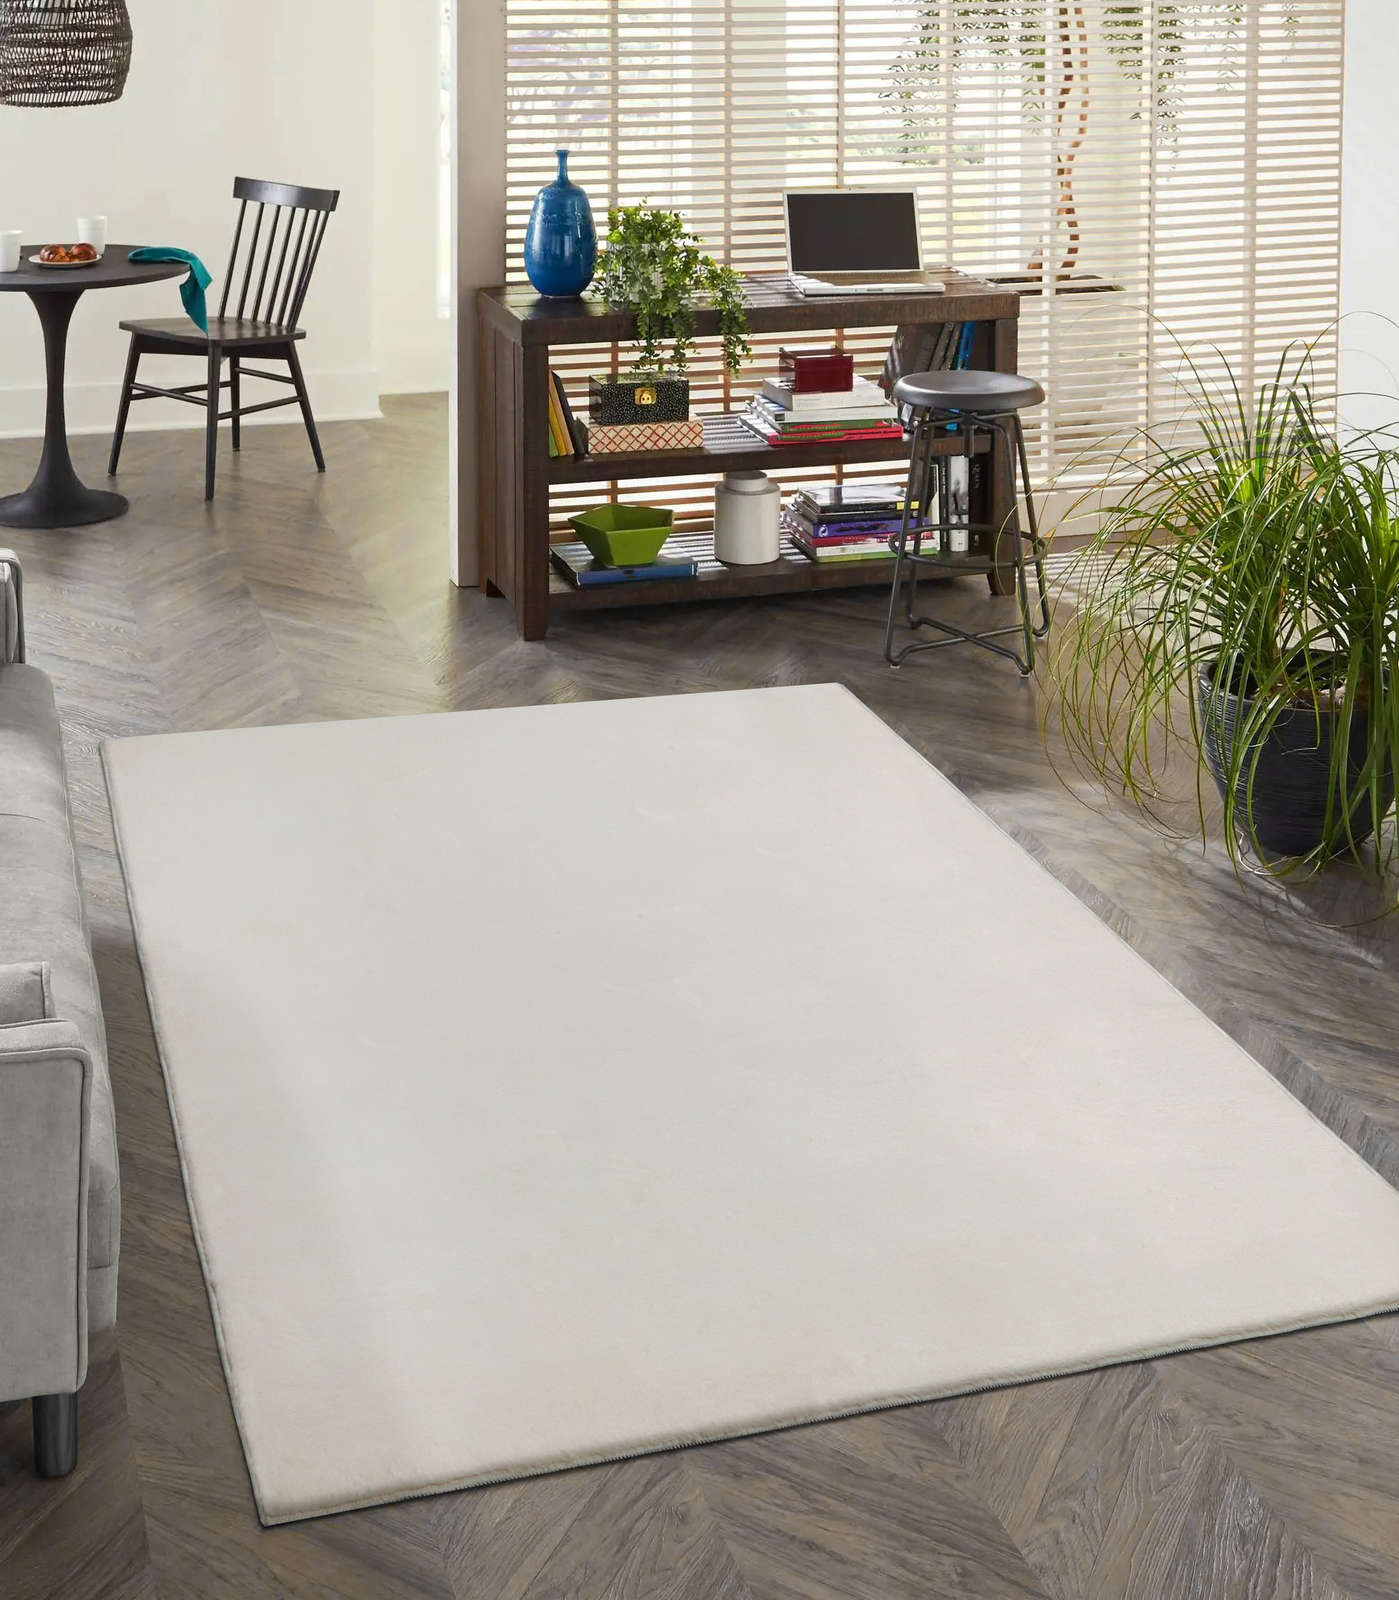             Soft high pile carpet in cream - 340 x 240 cm
        